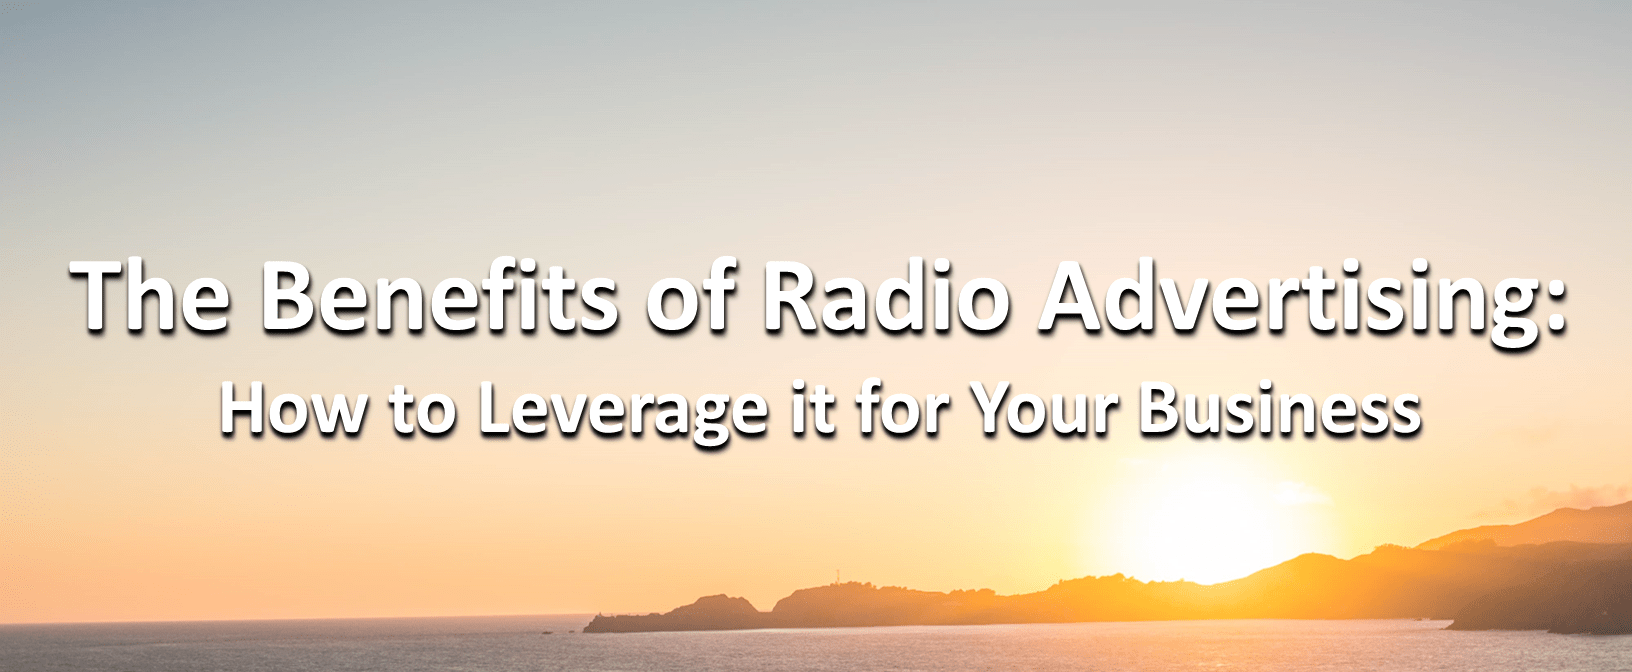 The benefits of radio advertising